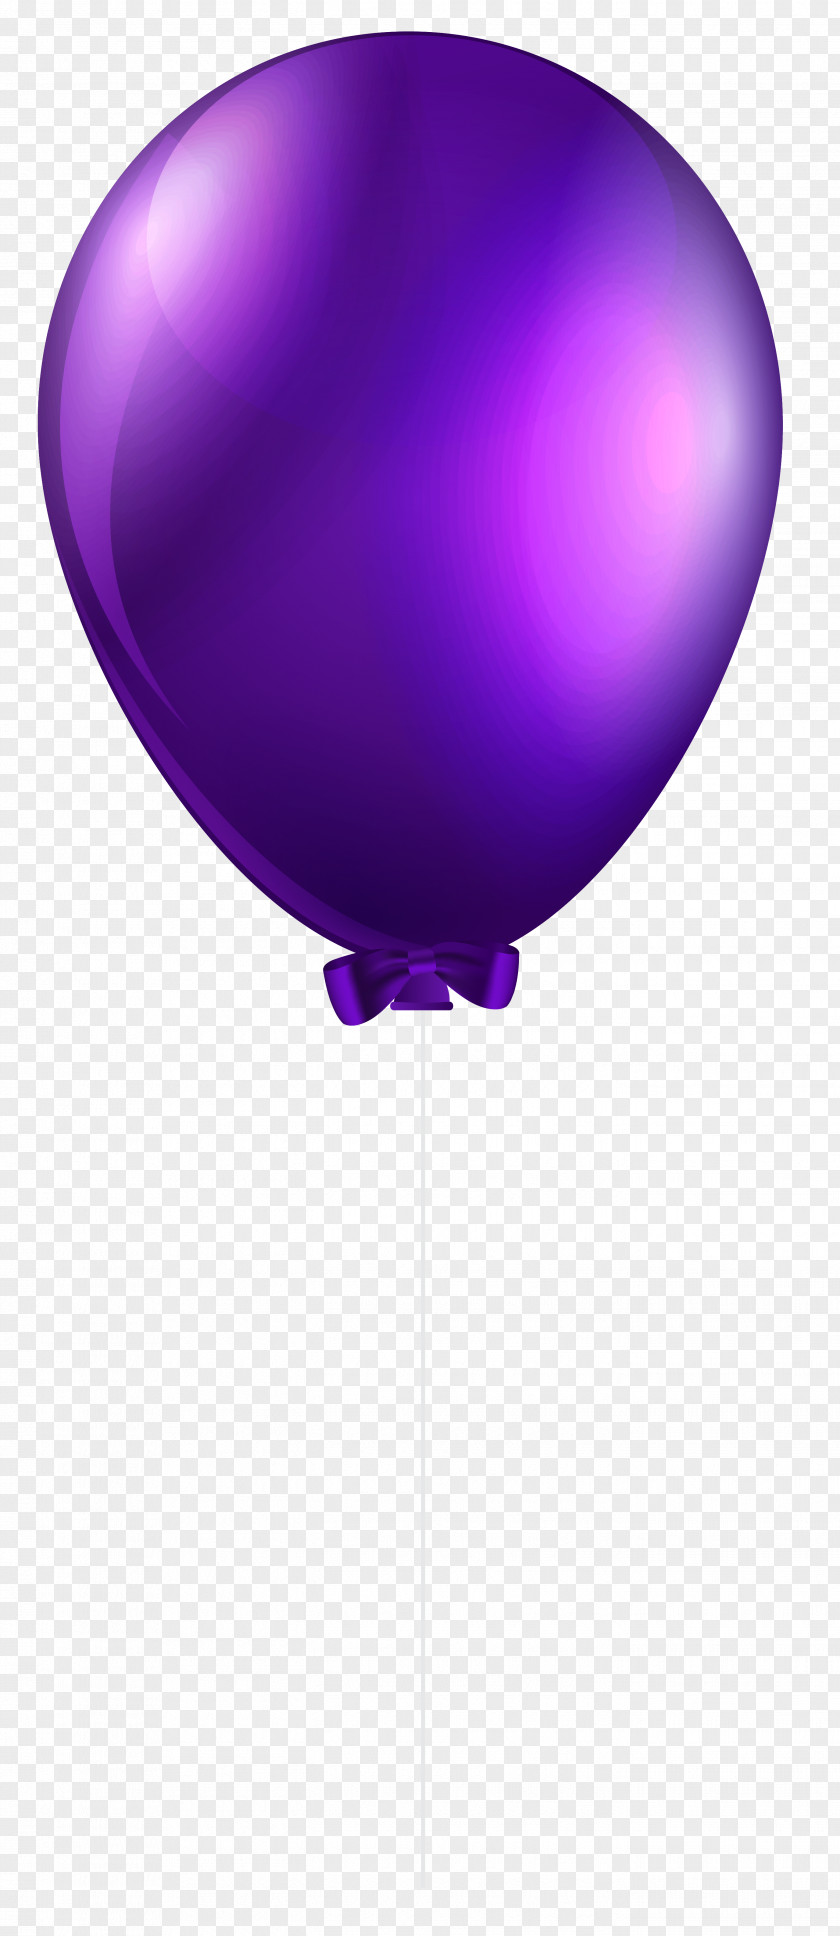 Purple Balloon Transparent Clip Art Image PNG